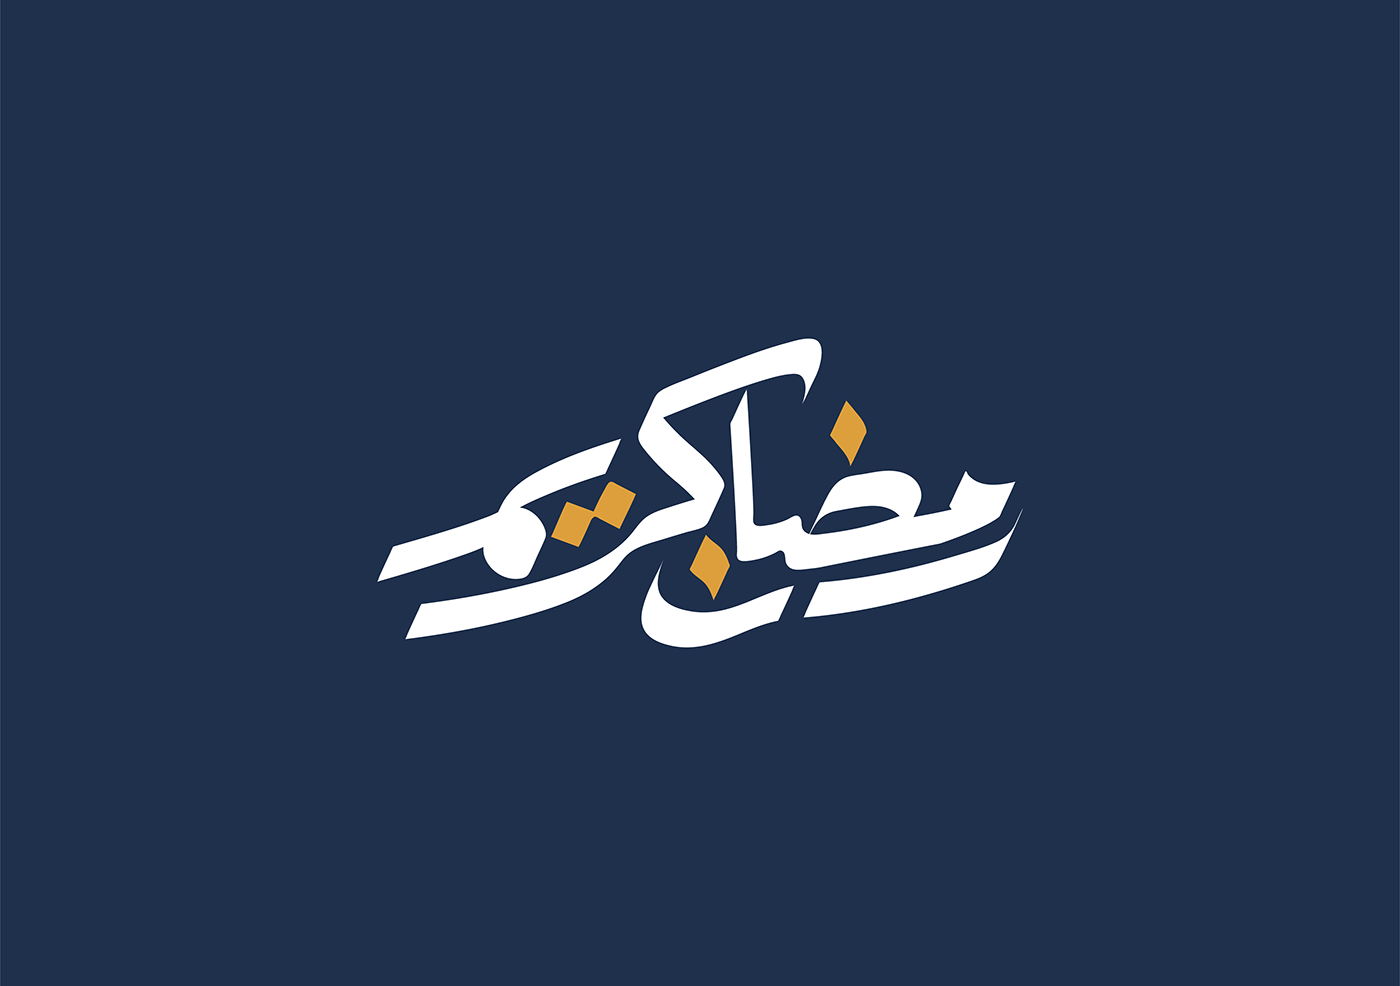 arabic typography Calligraphy   free typography ramadan ramadan karem Ramadan Mubarak typo typography   رمضان رمضان كريم